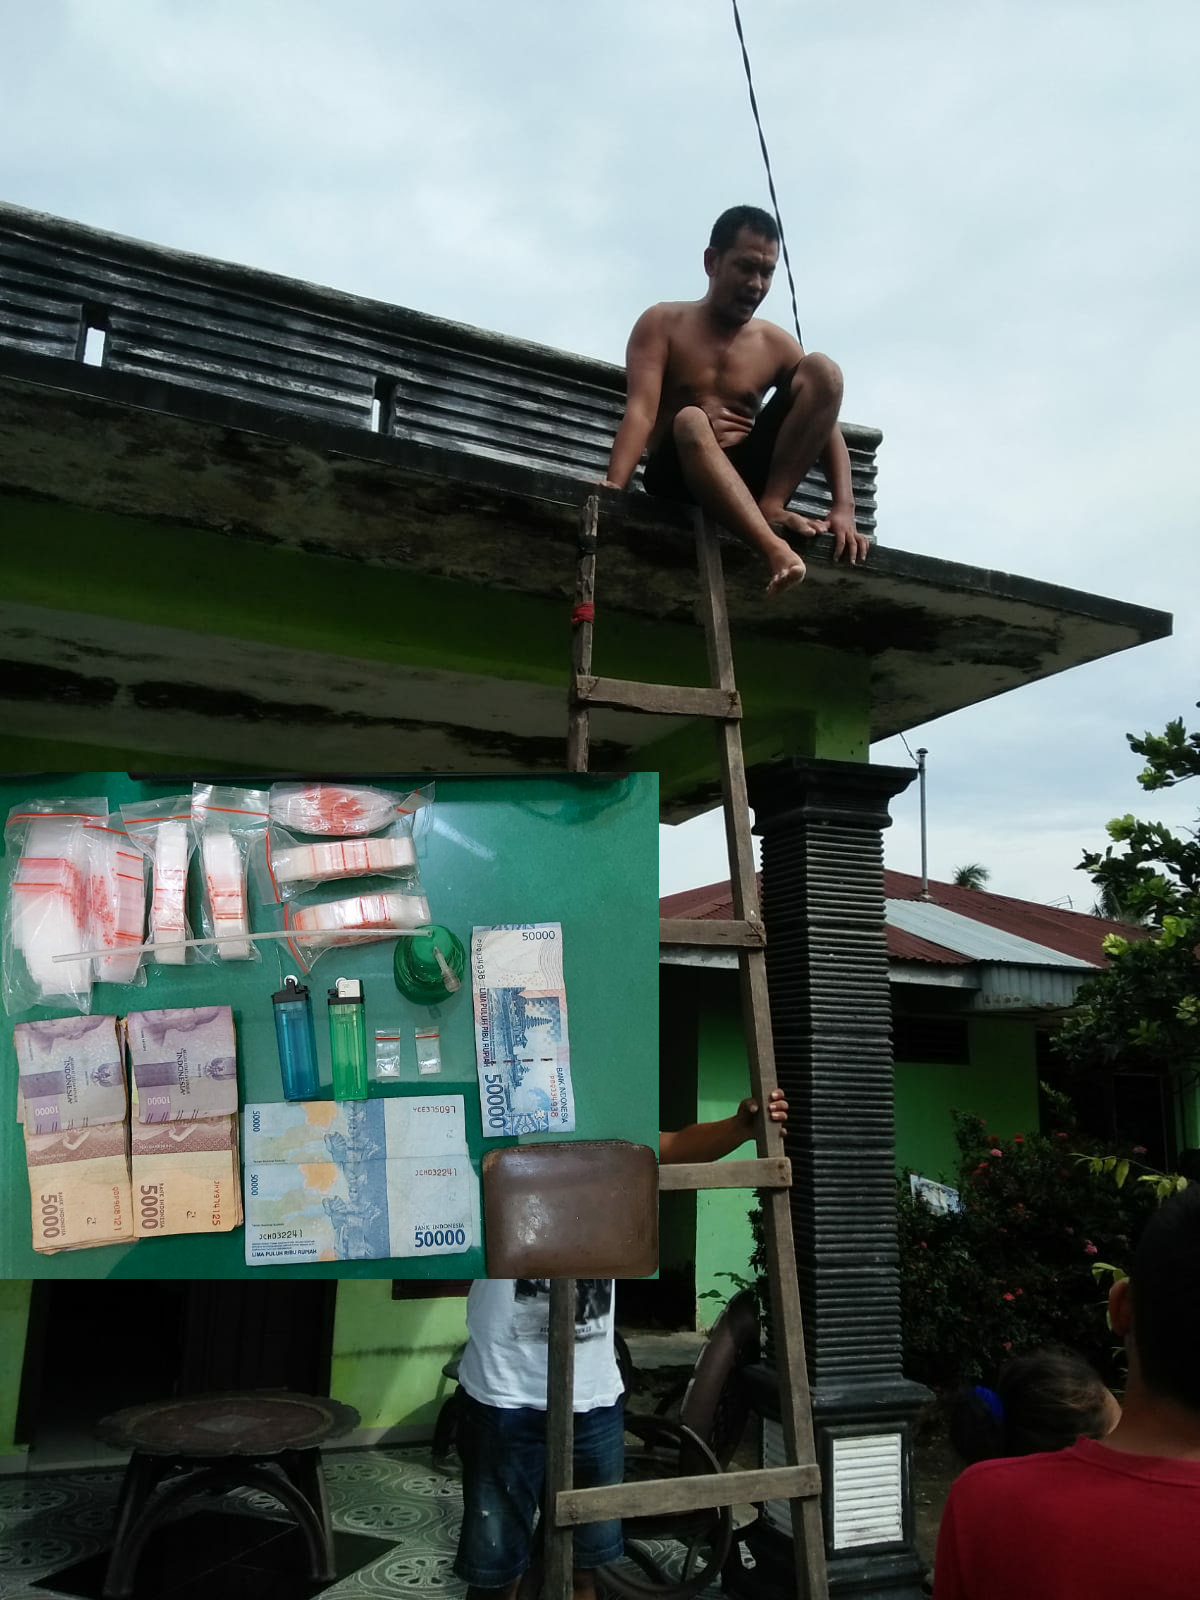 Sempat Lari ke Atap Rumah, Polres Sergai Amankan Pengedar Sabu